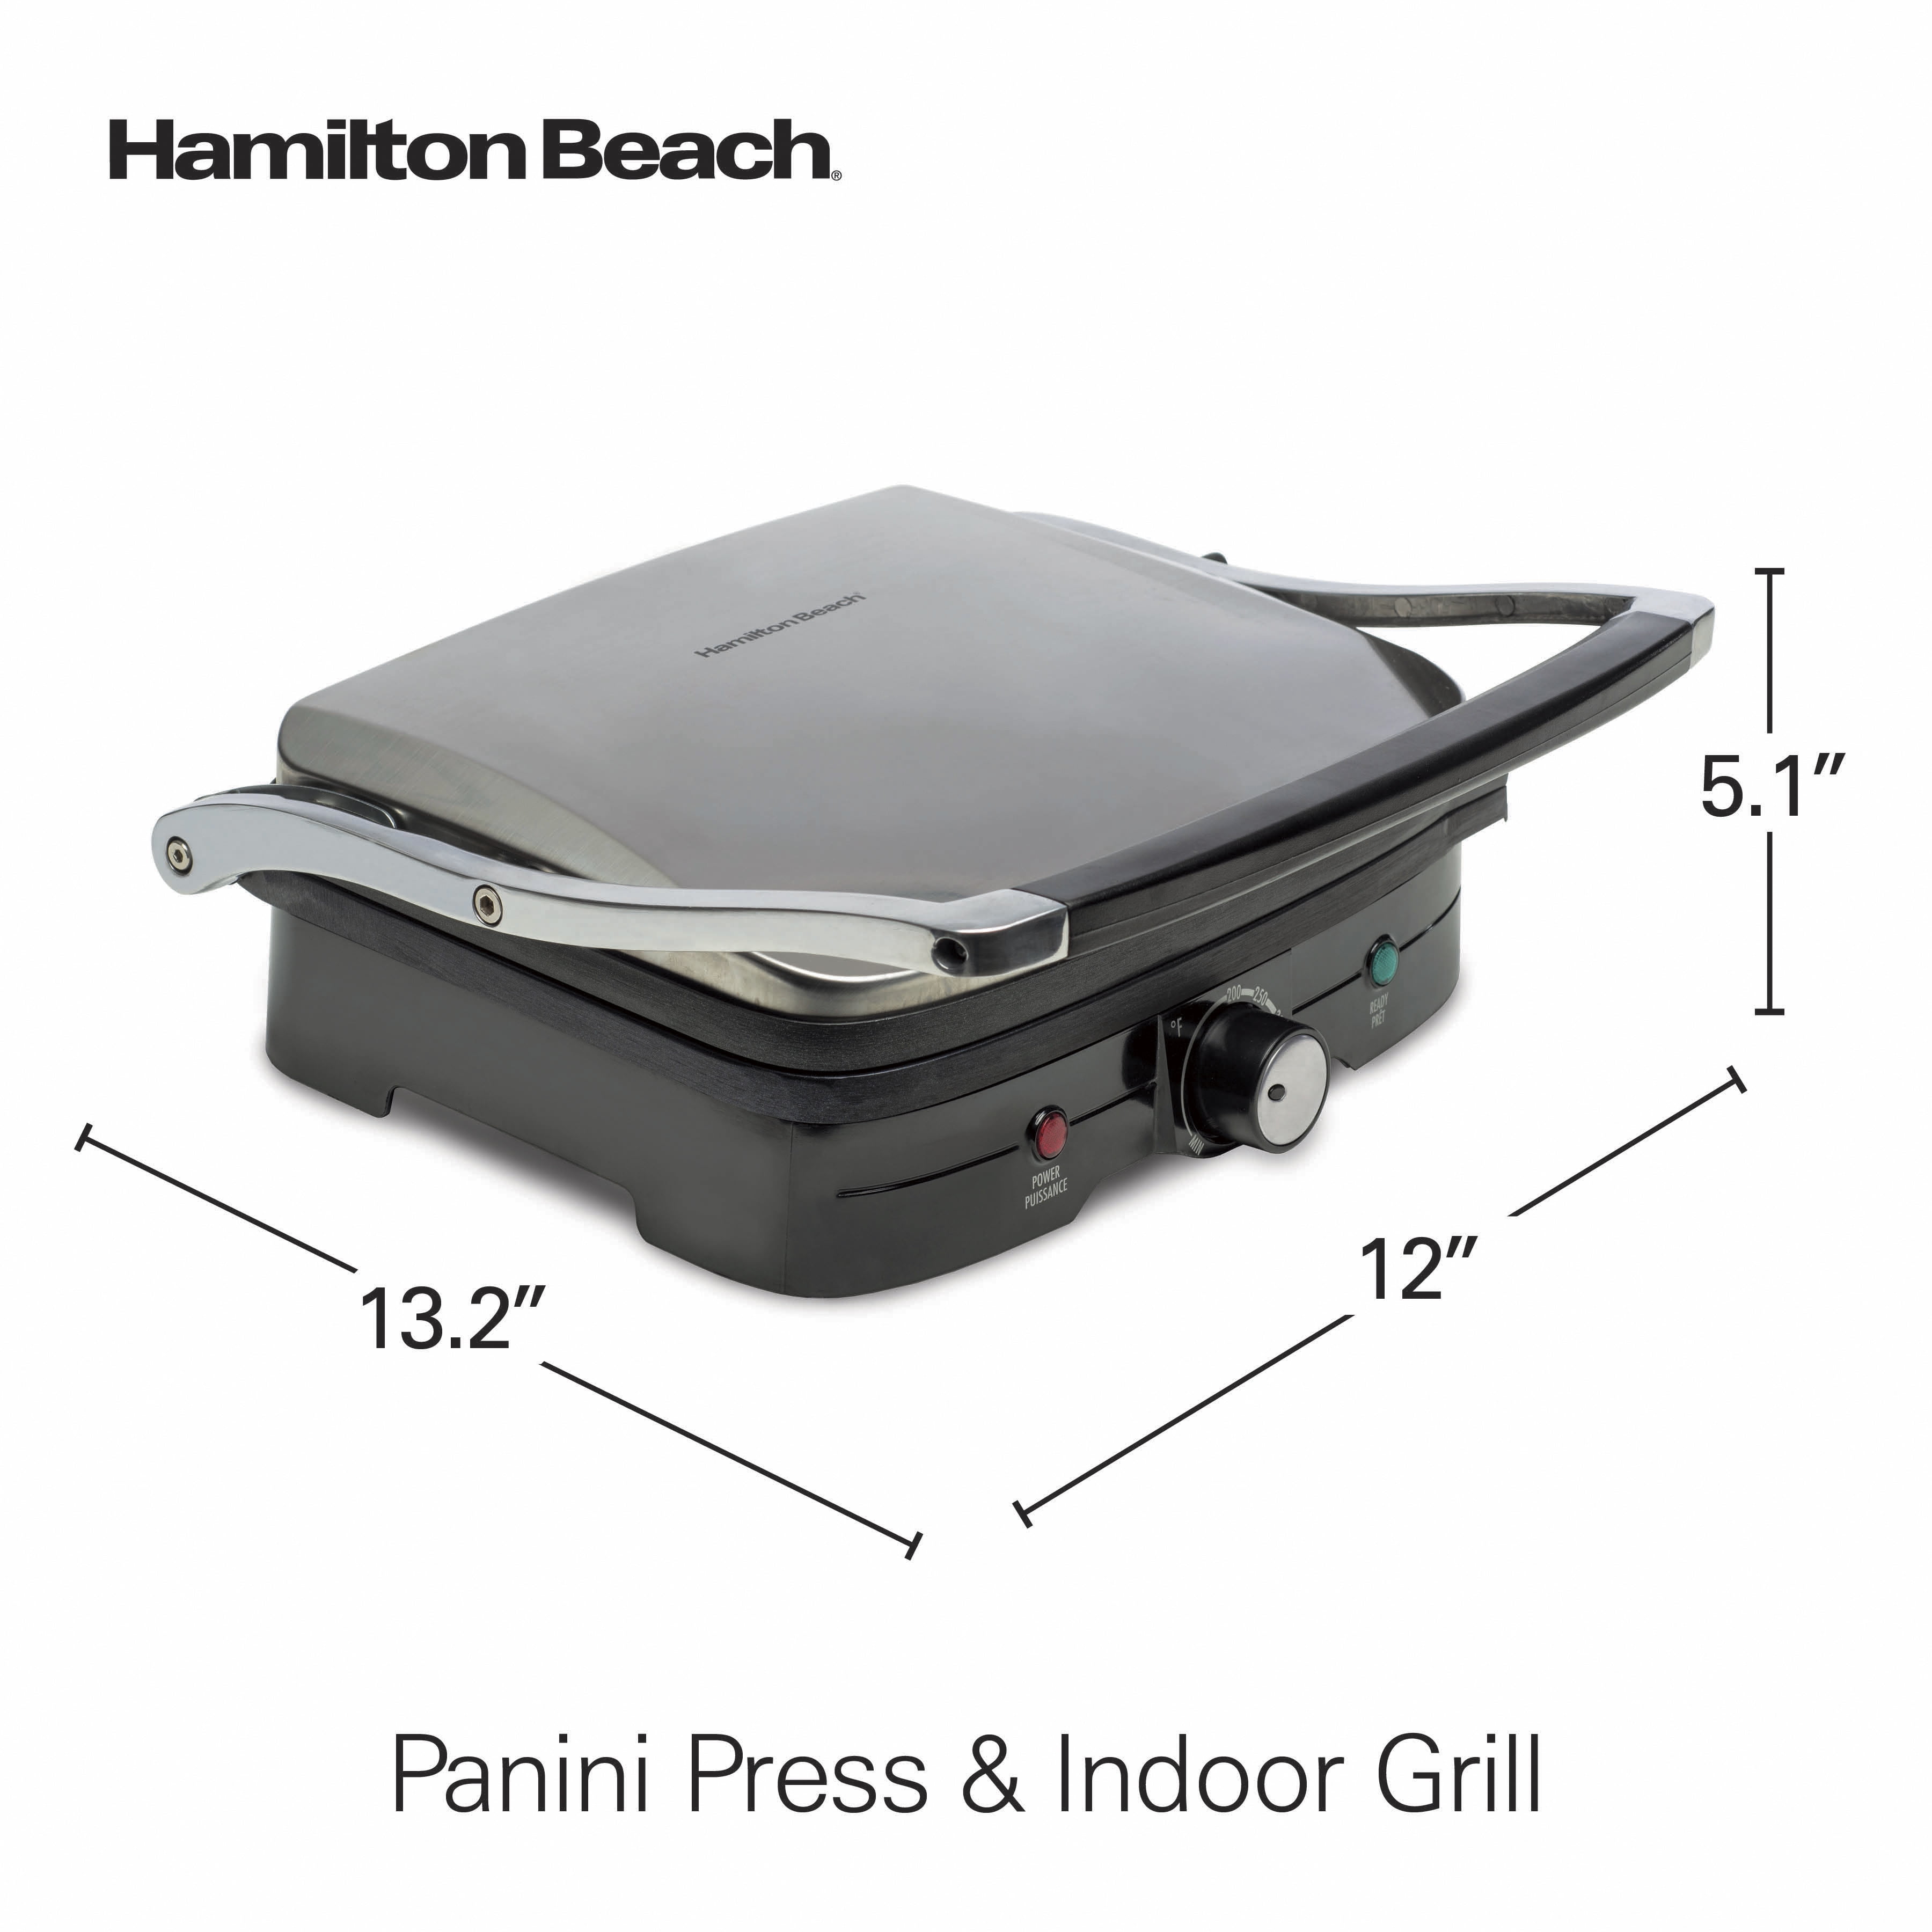 Hamilton Beach Panini Press & Indoor Grill - 9277587